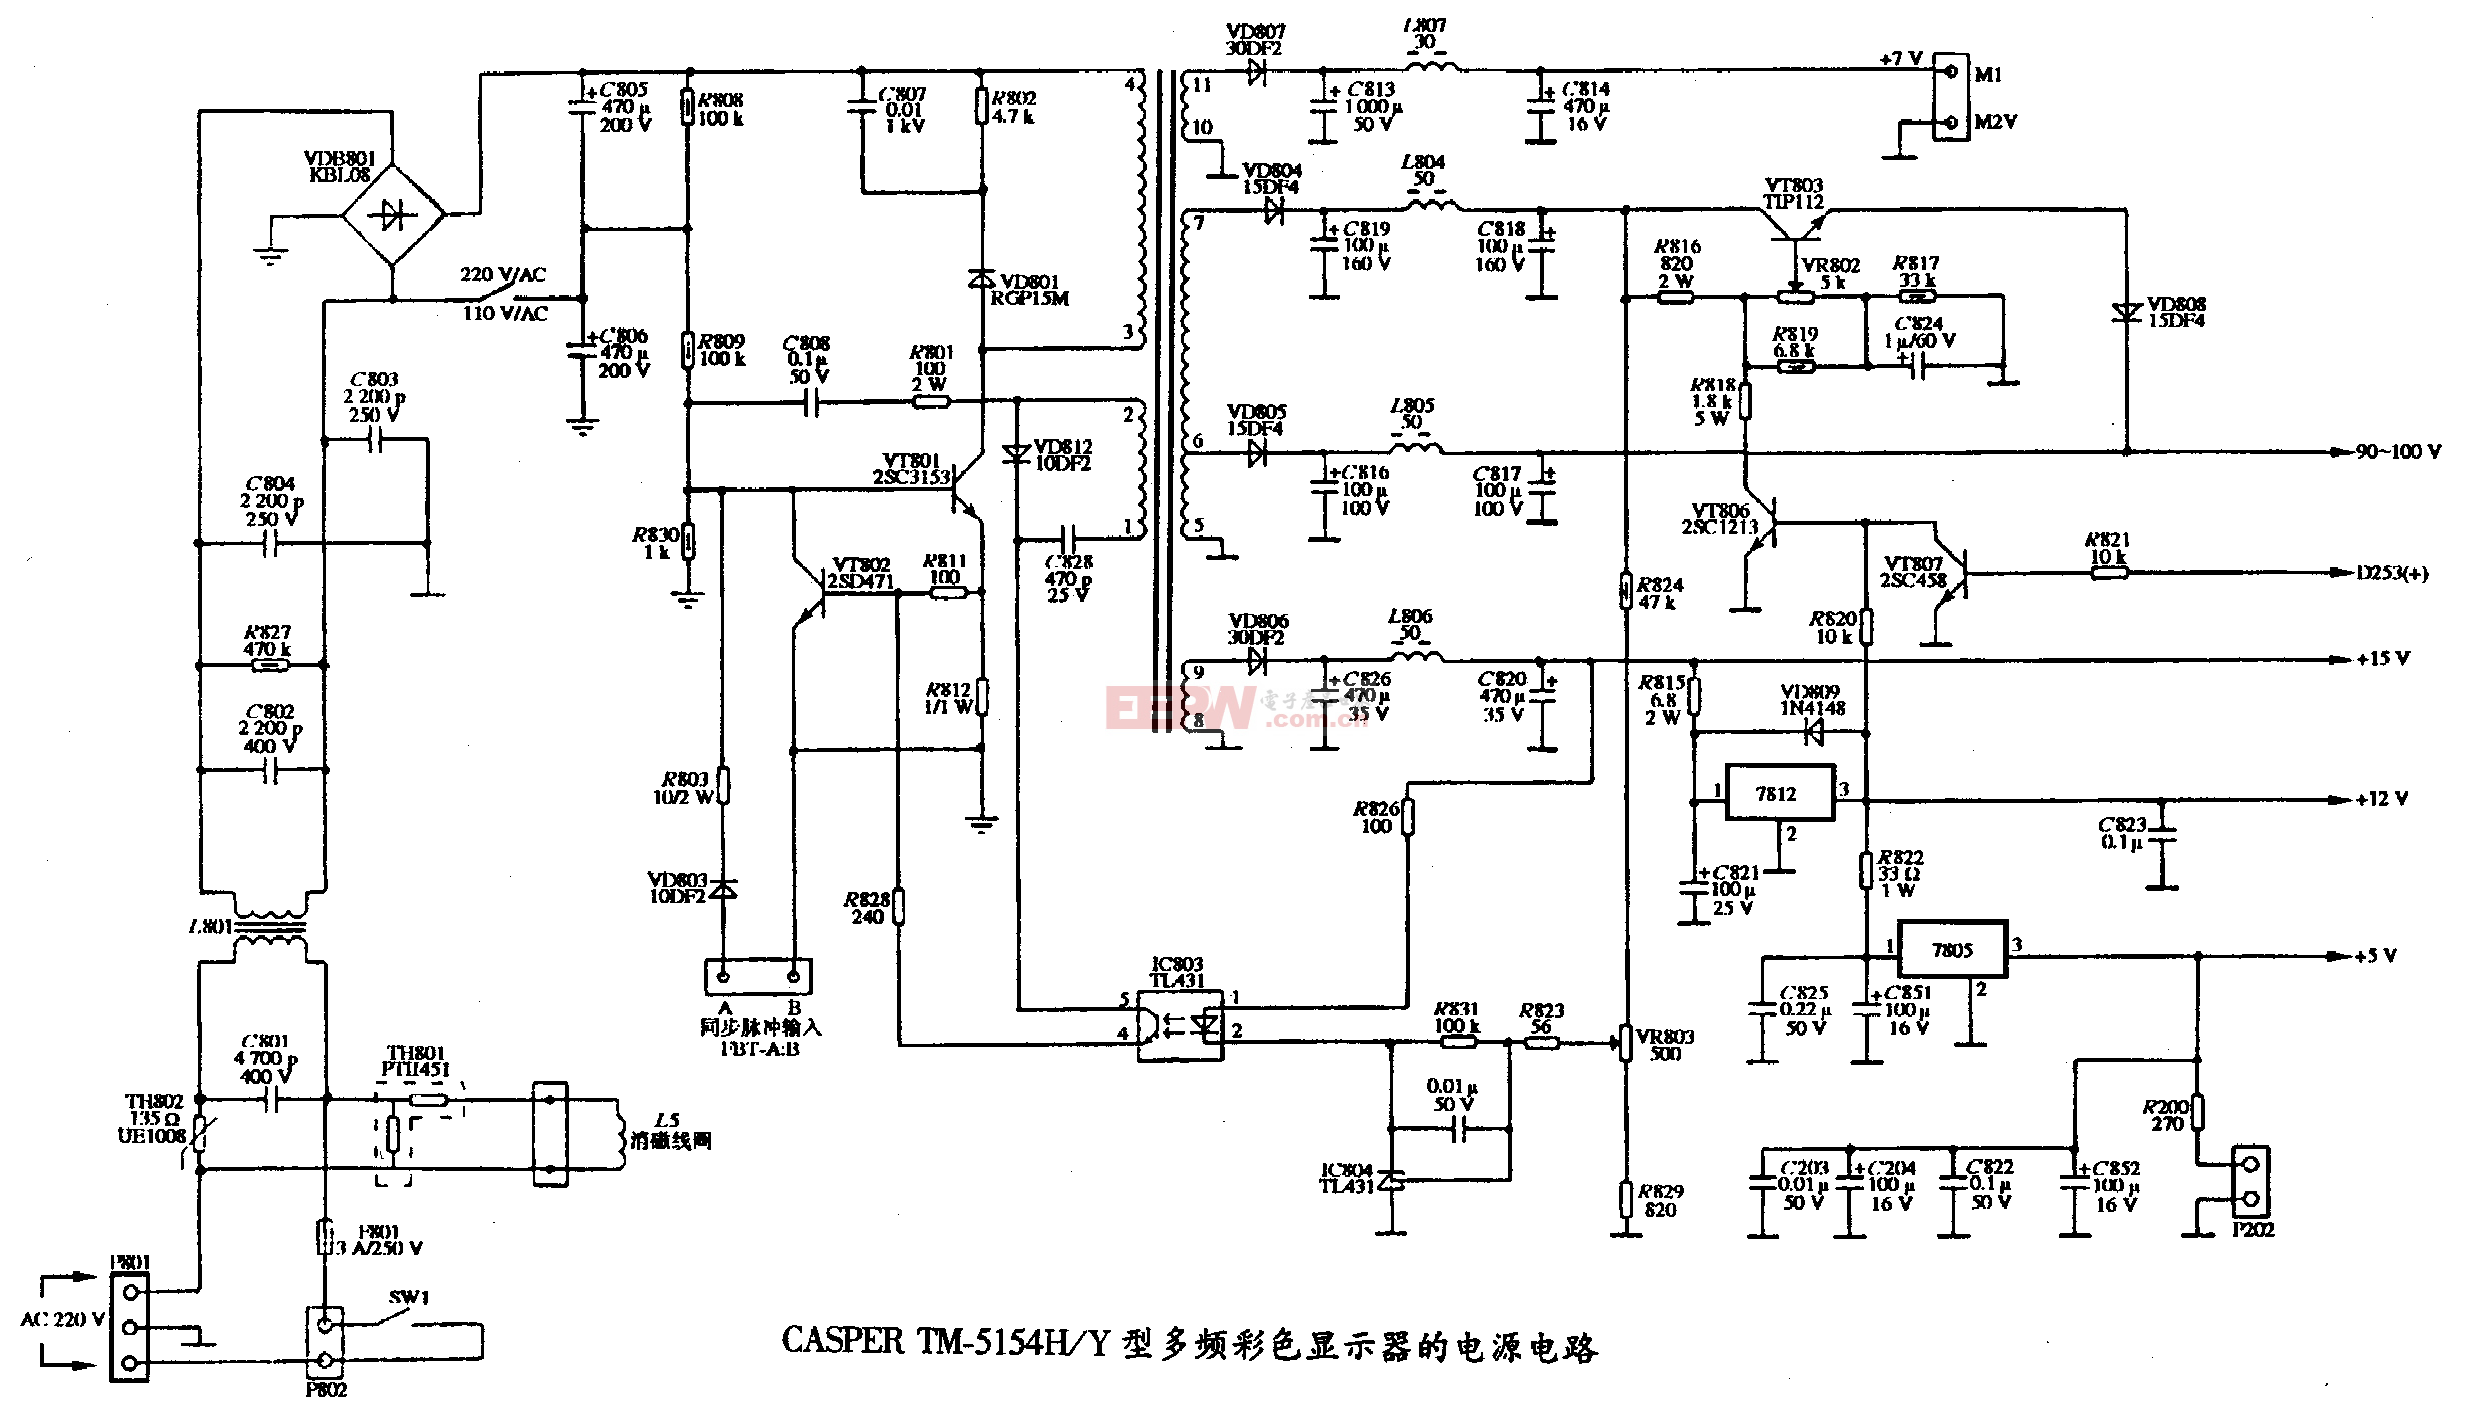 23、CASPER TM-5154H型SVGA多频彩色显示器的电源电路图